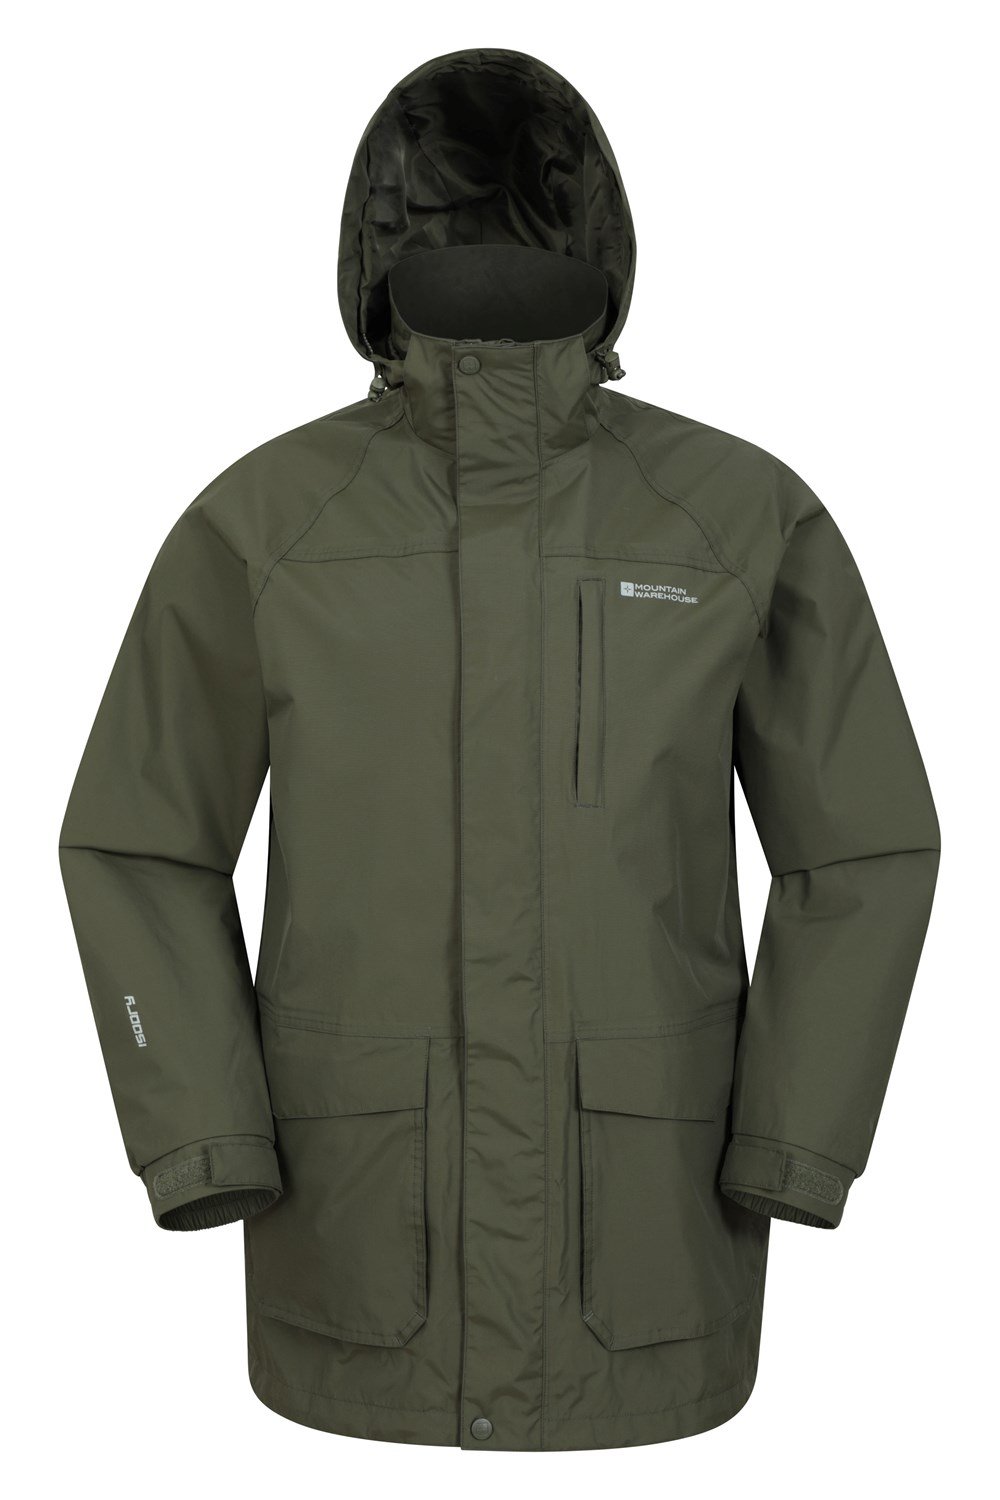 Mountain Warehouse Mens Long Waterproof Jacket Rain Coat Cagoule Taped ...